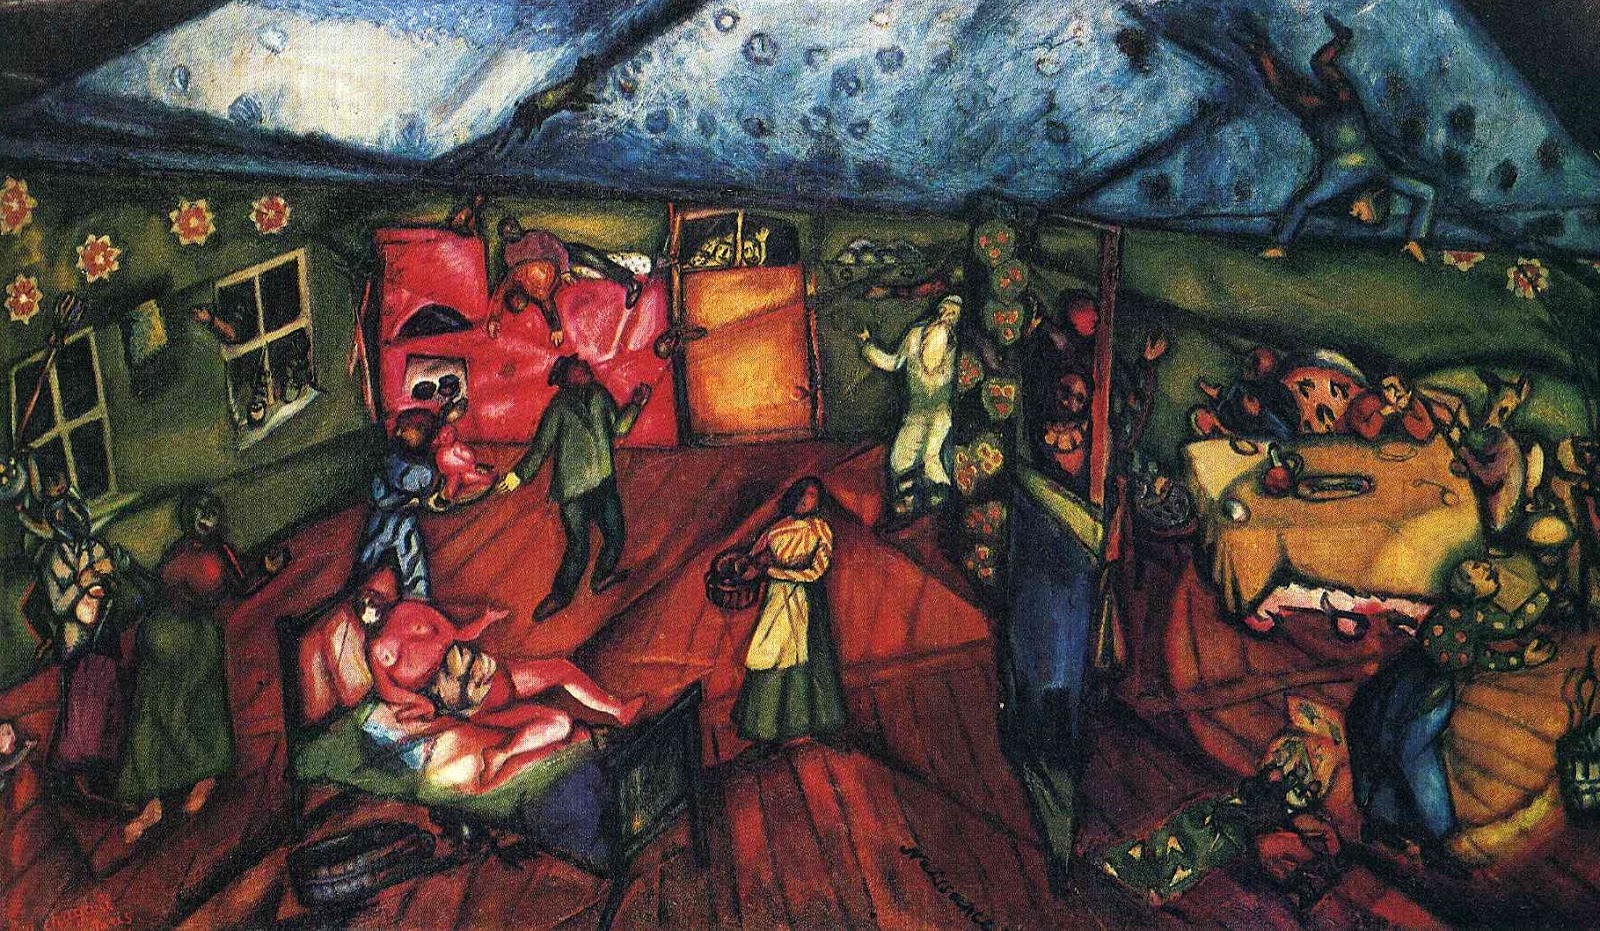 Marc+Chagall-1887-1985 (418).jpg